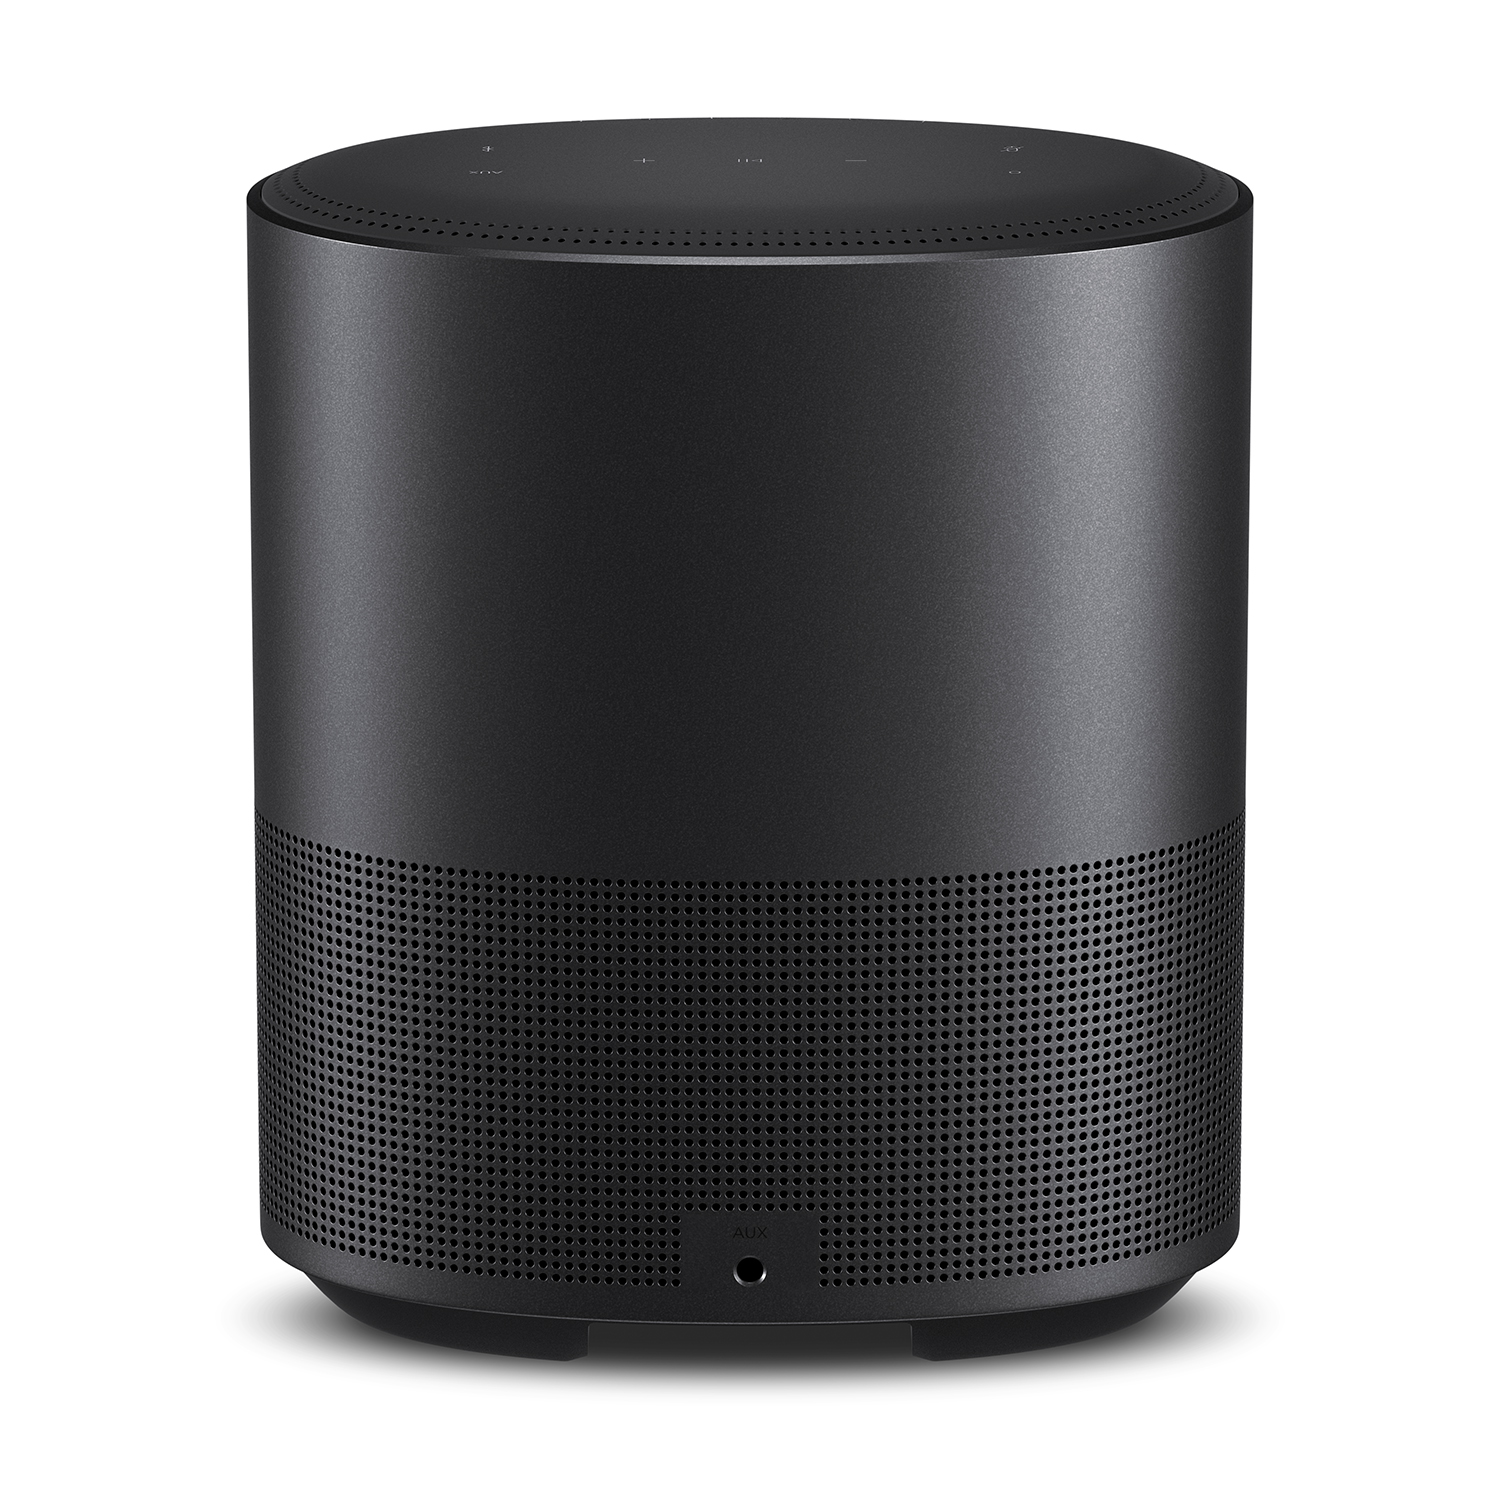 Bose Home Speaker 500 Wireless Smart Speaker with Google Assistant - Black - image 5 of 6